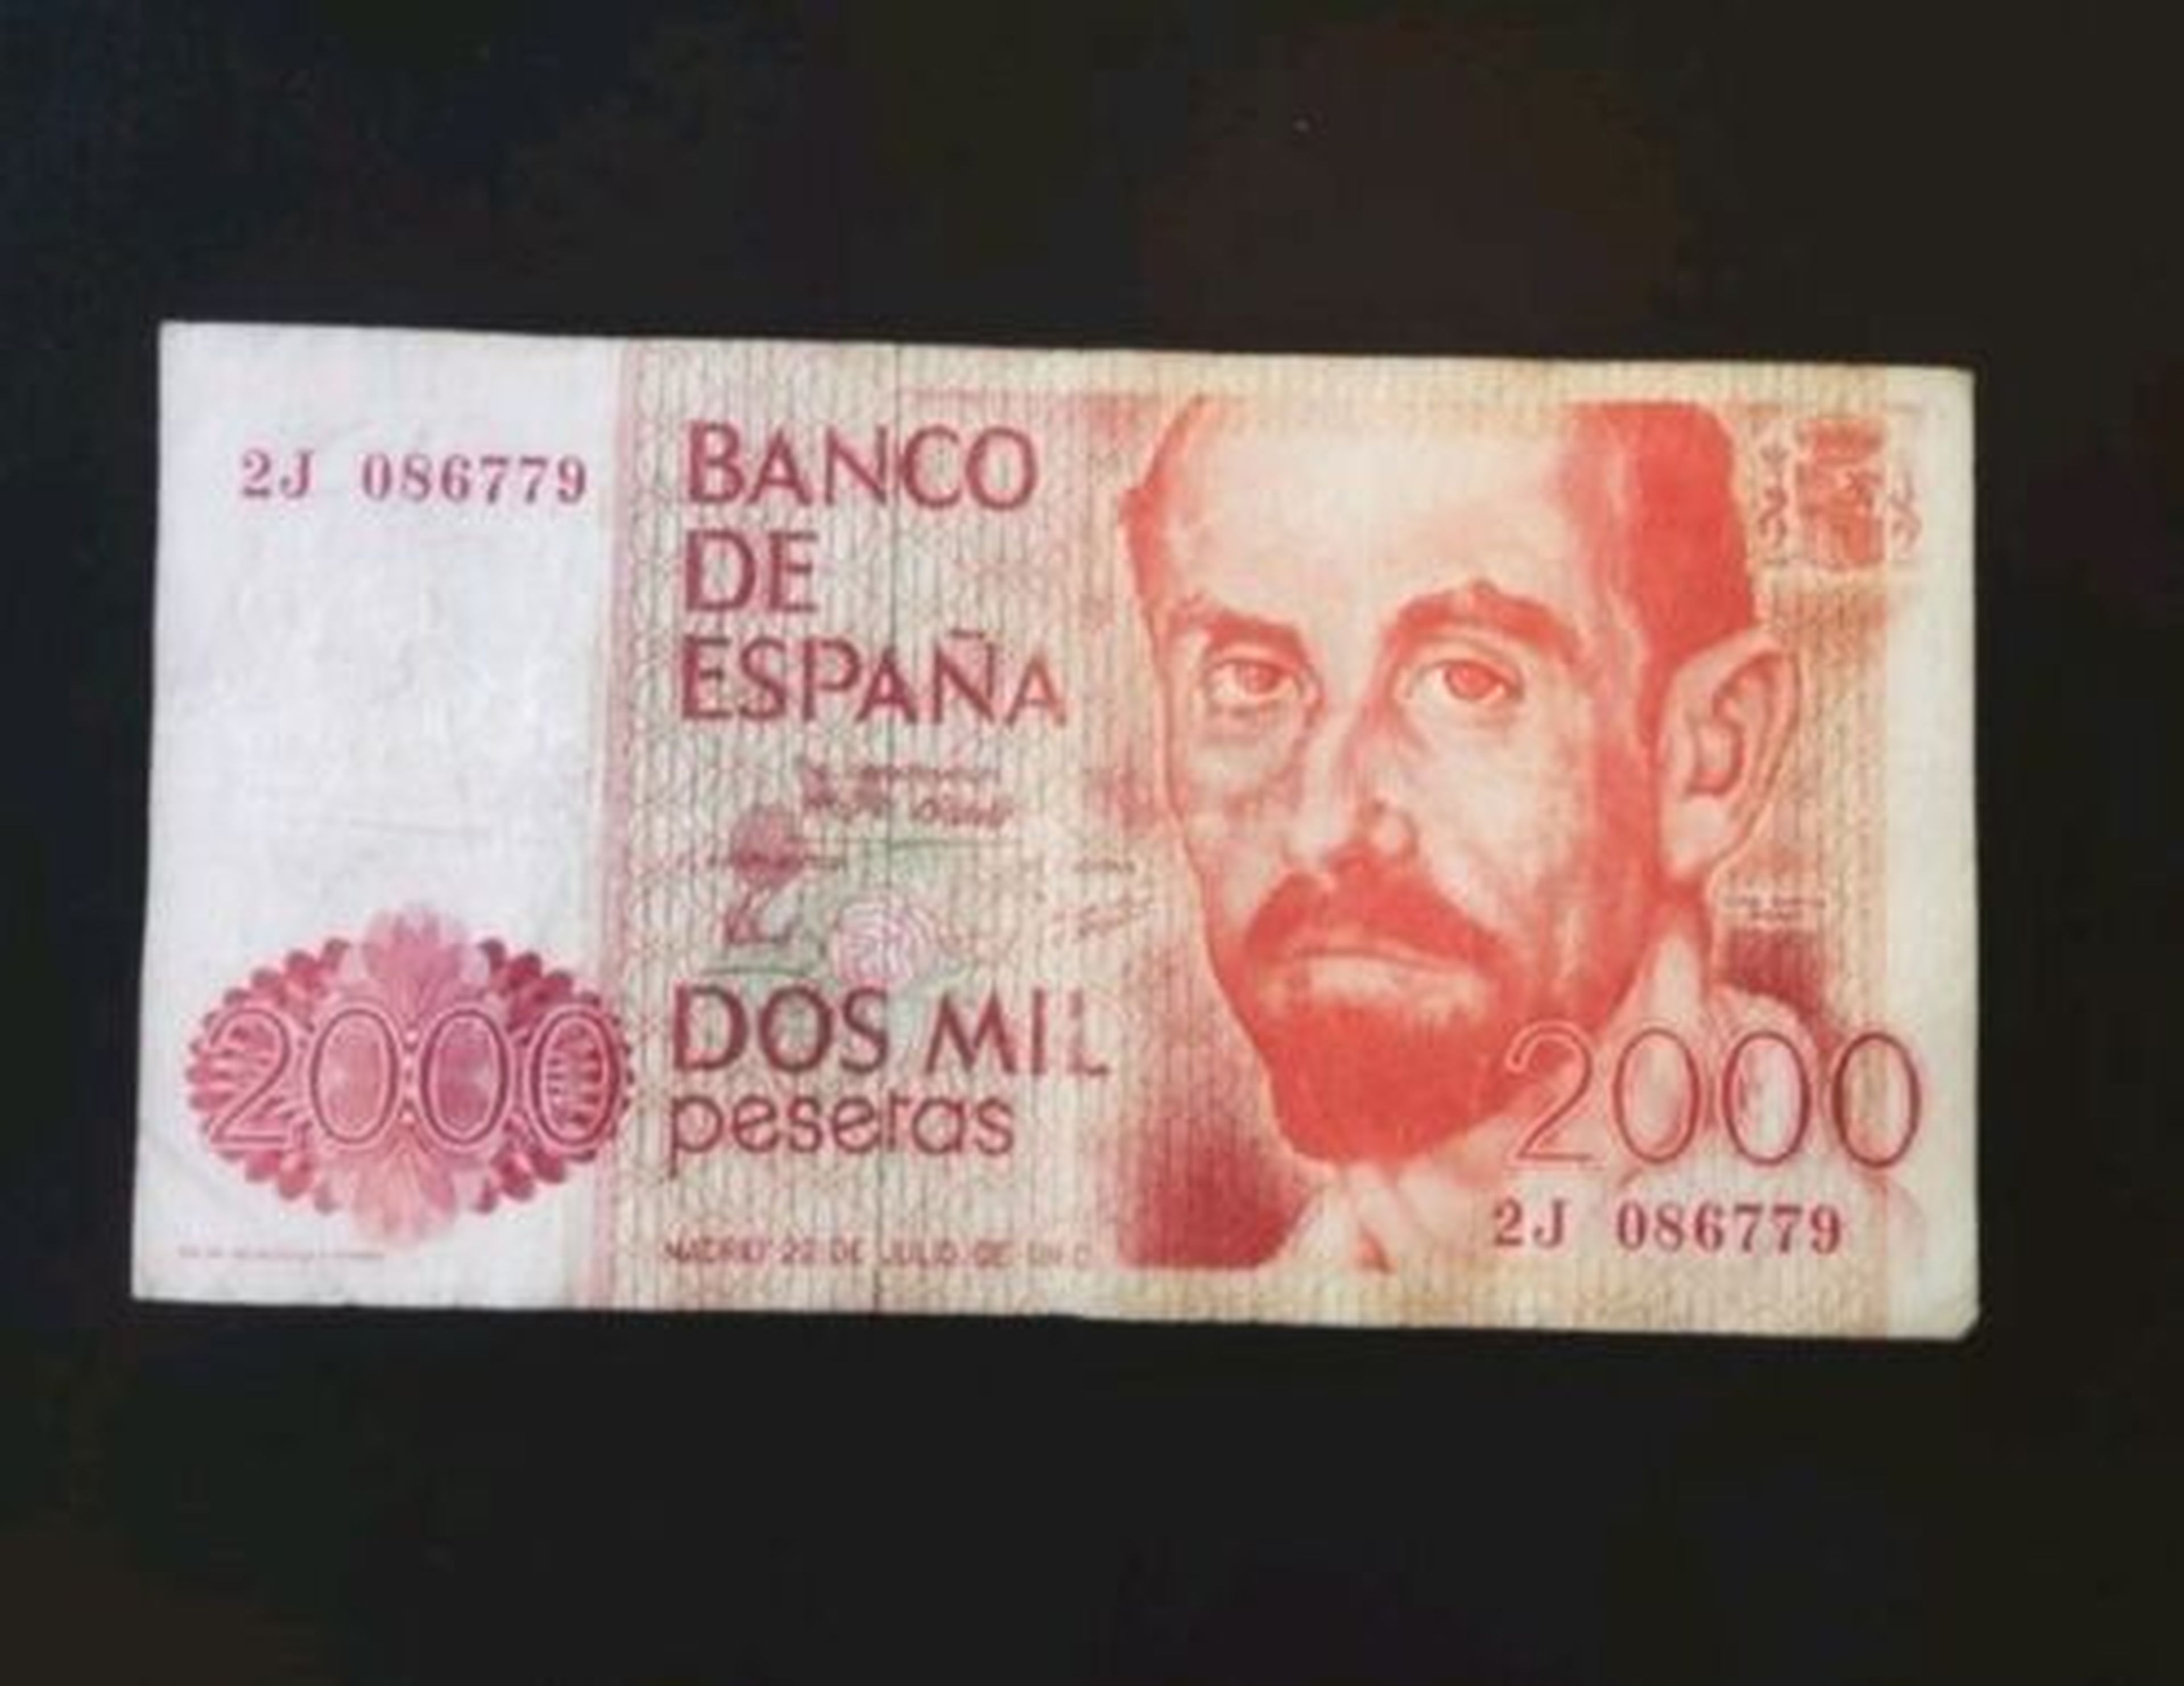 2000 pesetas